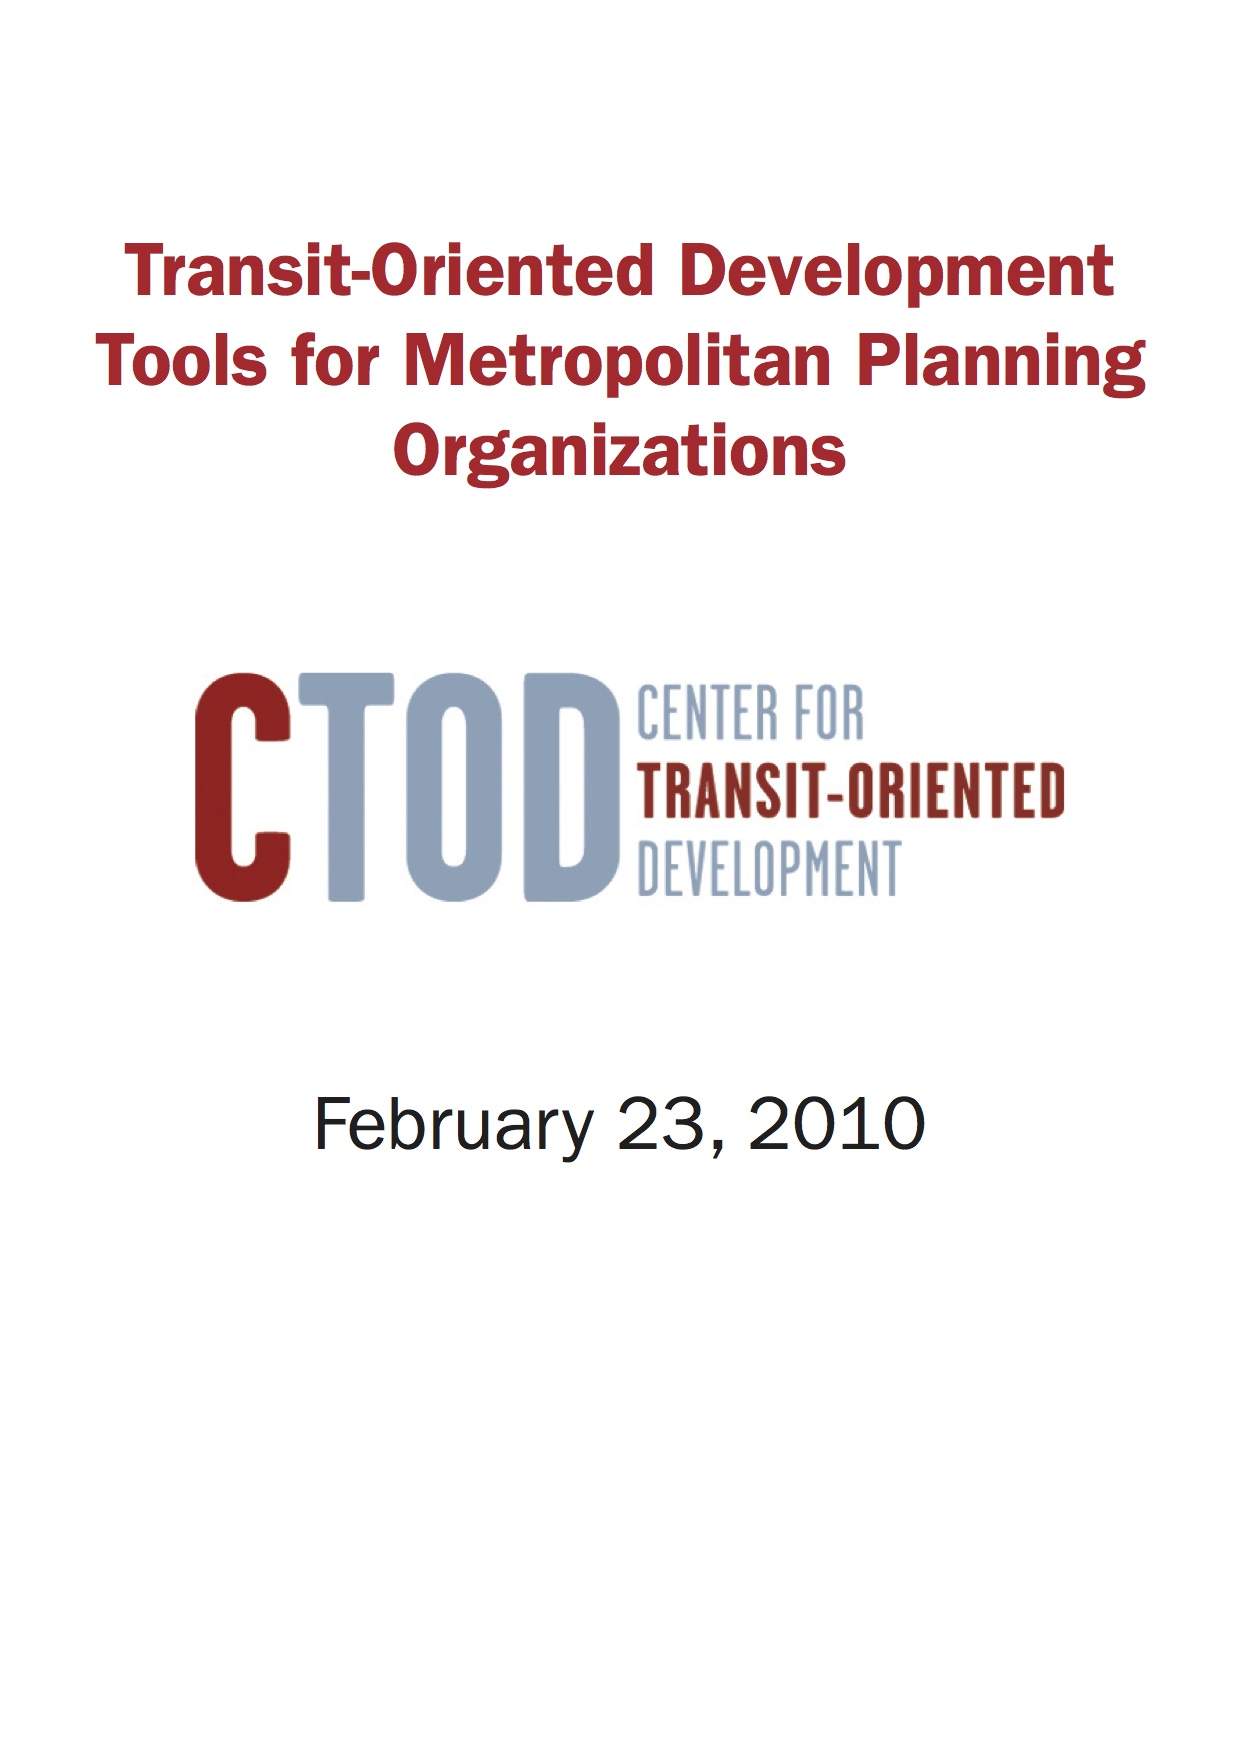 Transit-Oriented Development Tools for Metropolitan Planning Organizations